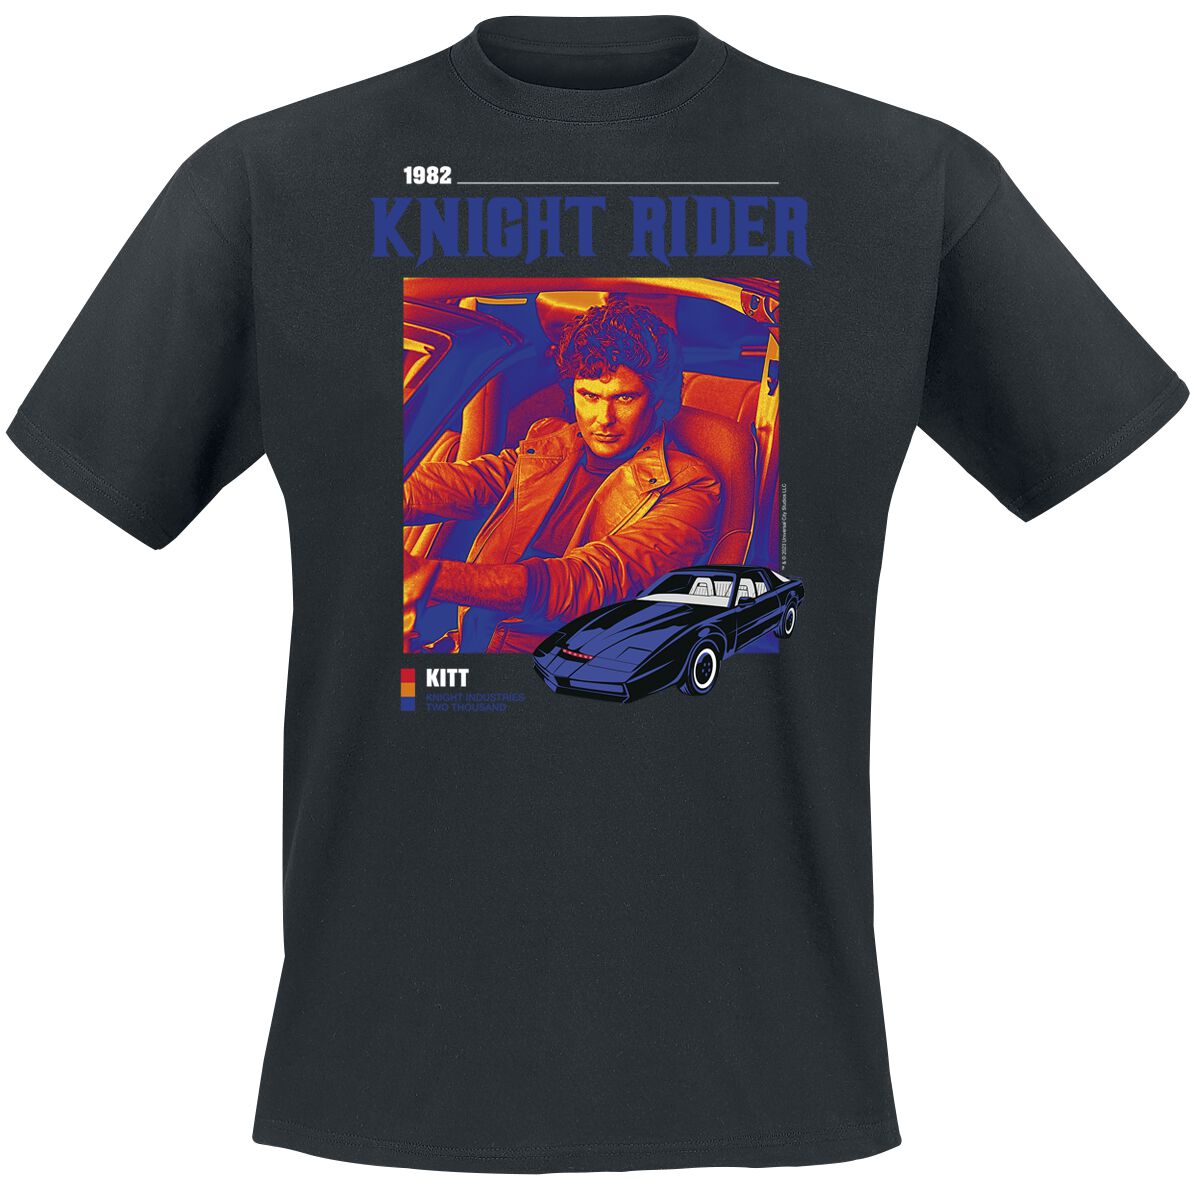 Knight Rider 1982 Kit T-Shirt schwarz in XXL